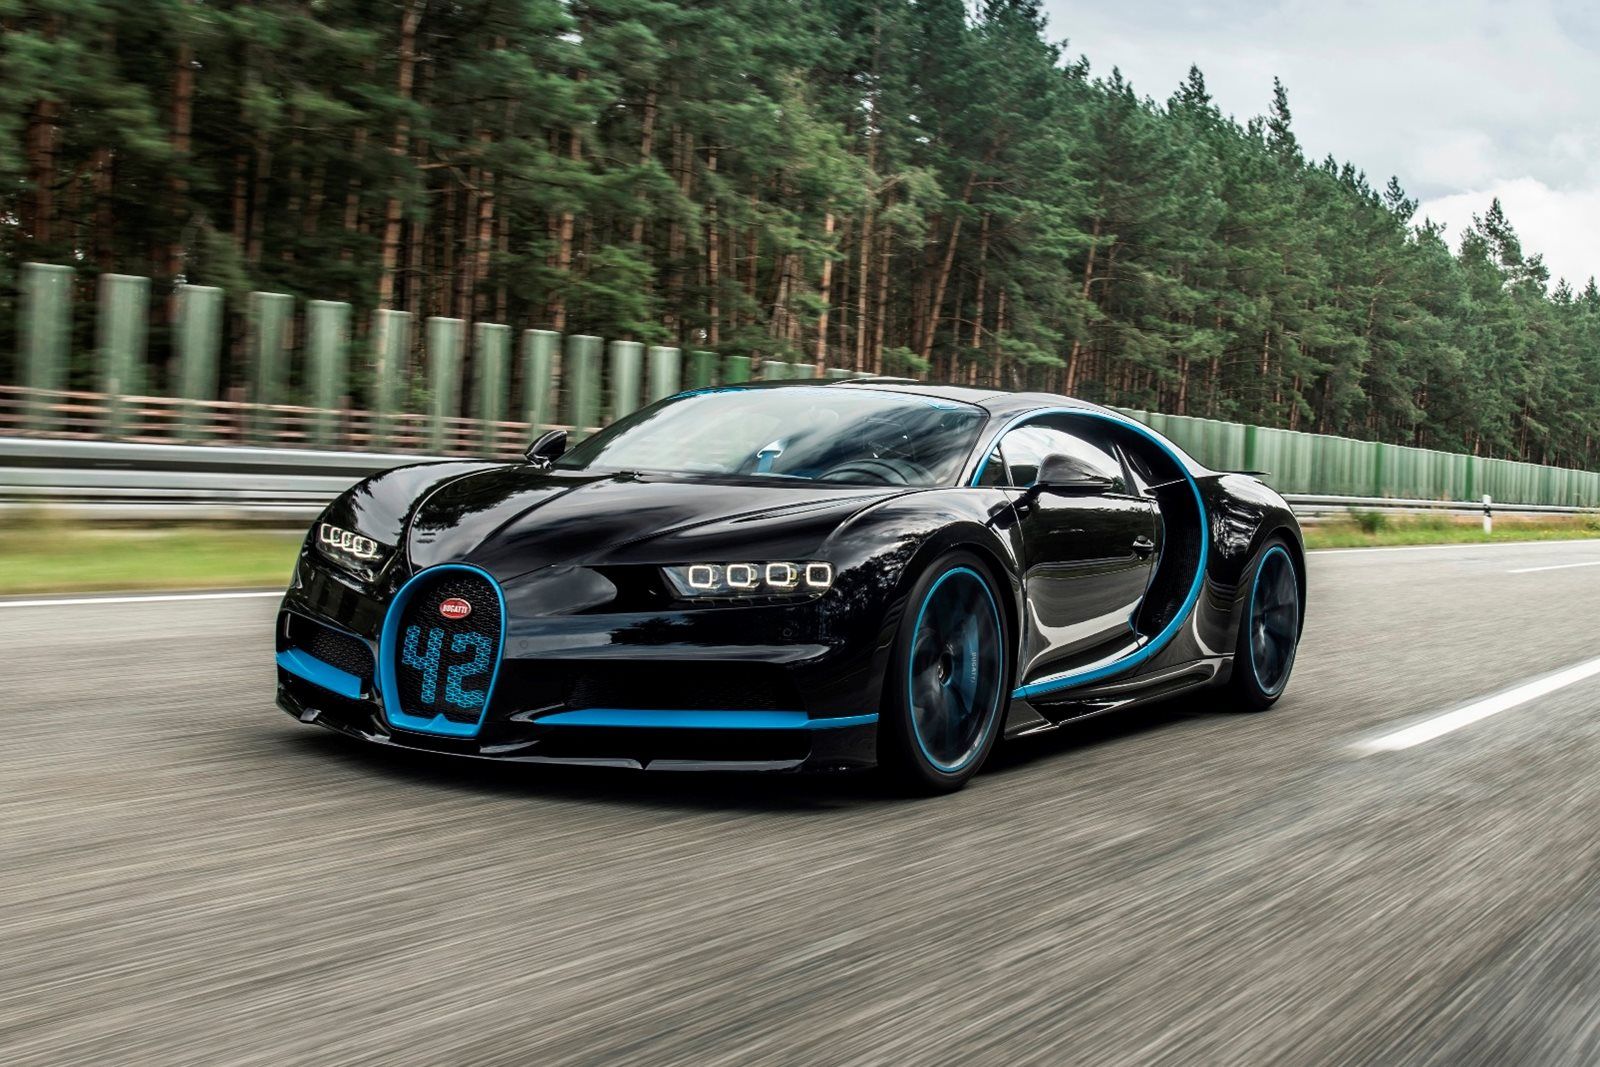 Bugatti Chiron on the highway